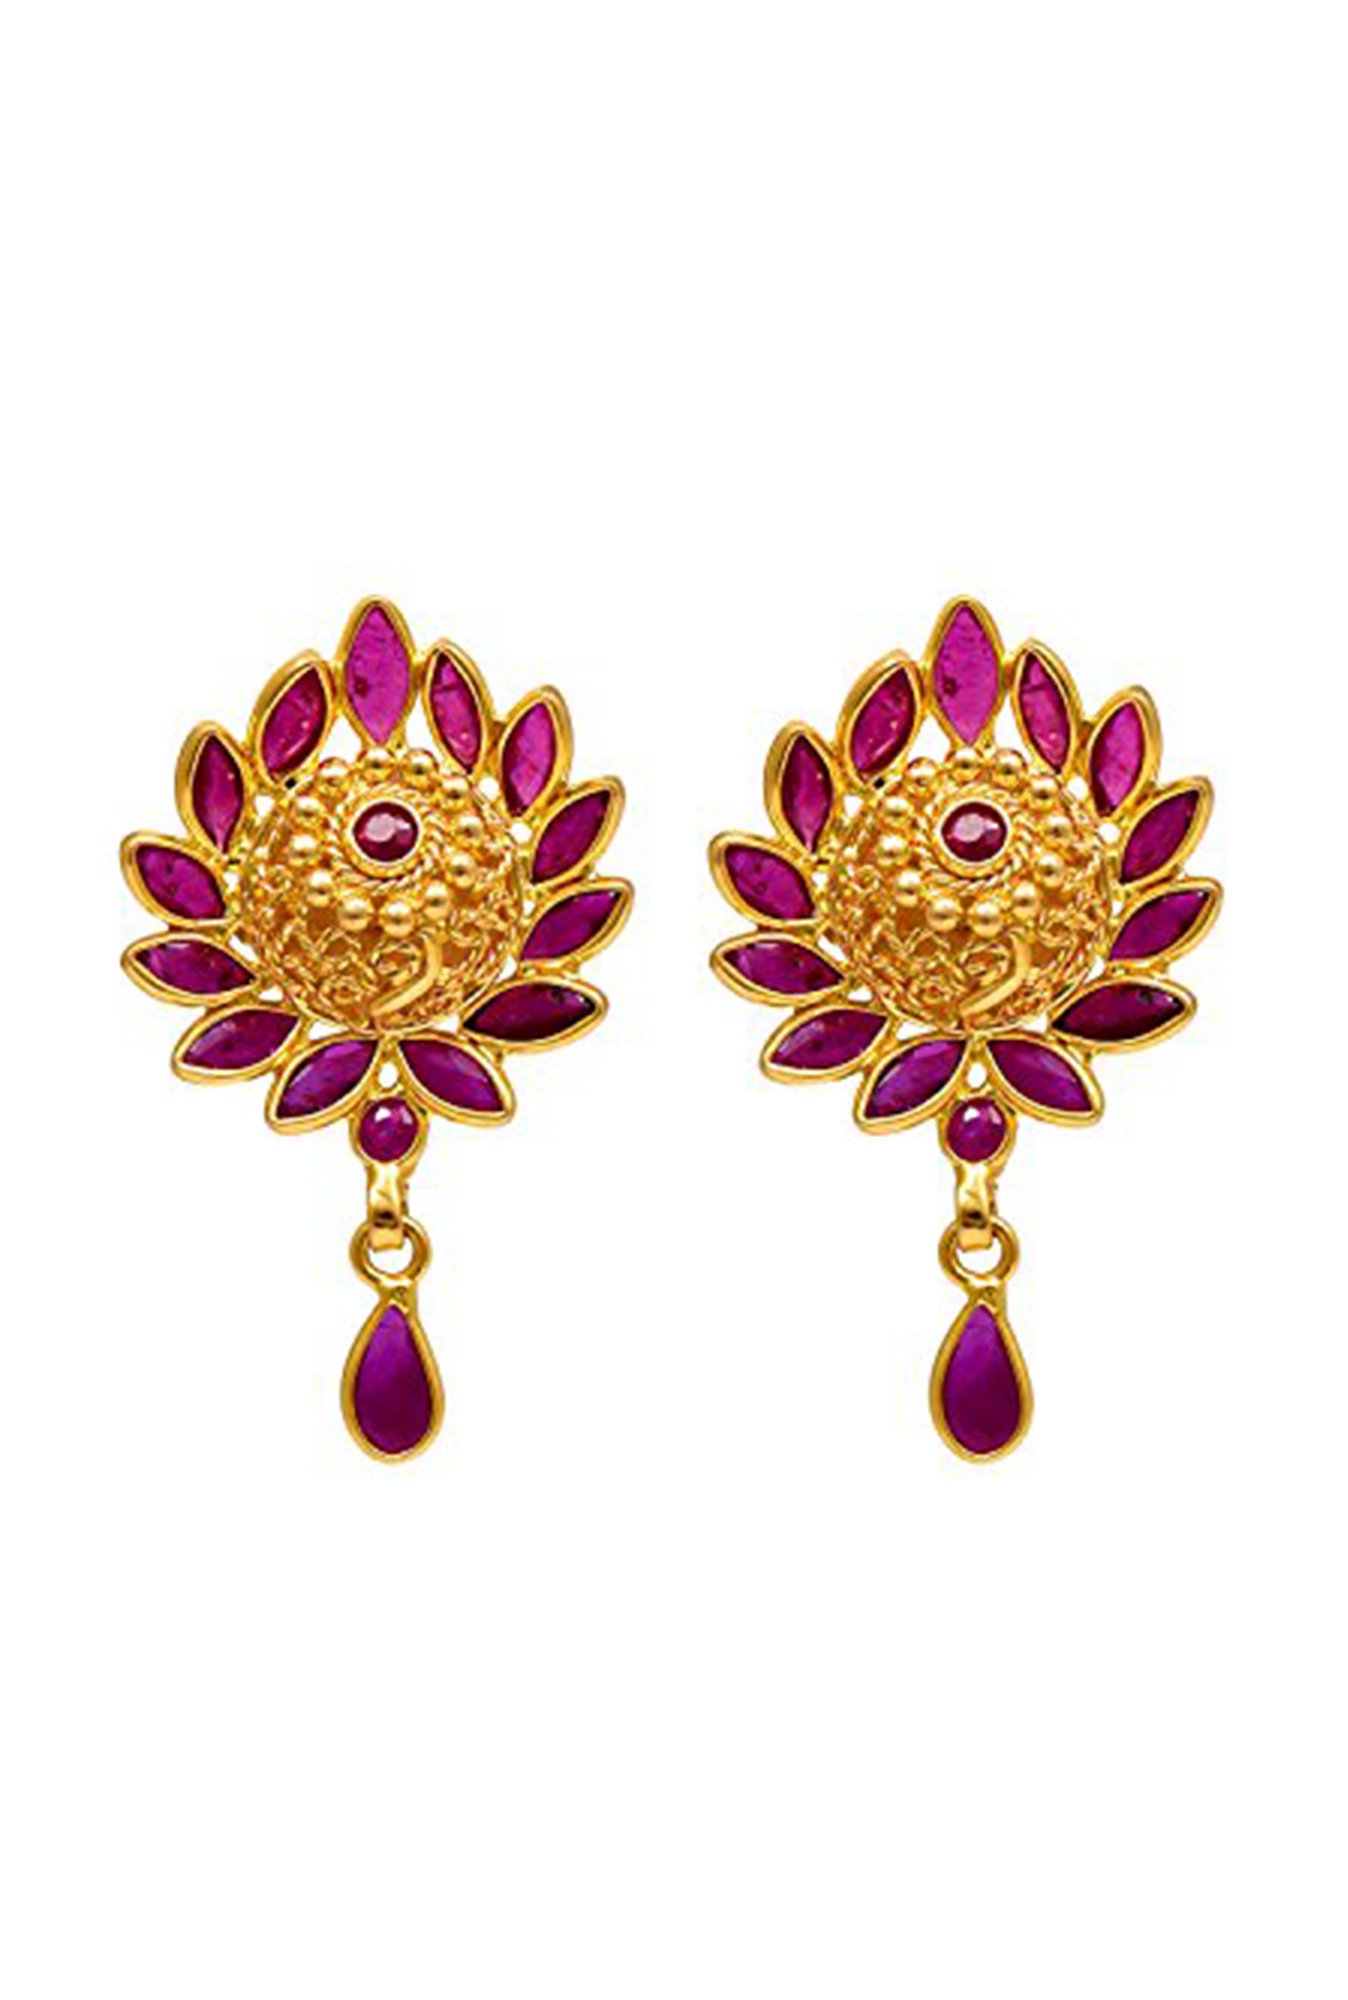 Discover more than 195 joyalukkas gold earring designs best